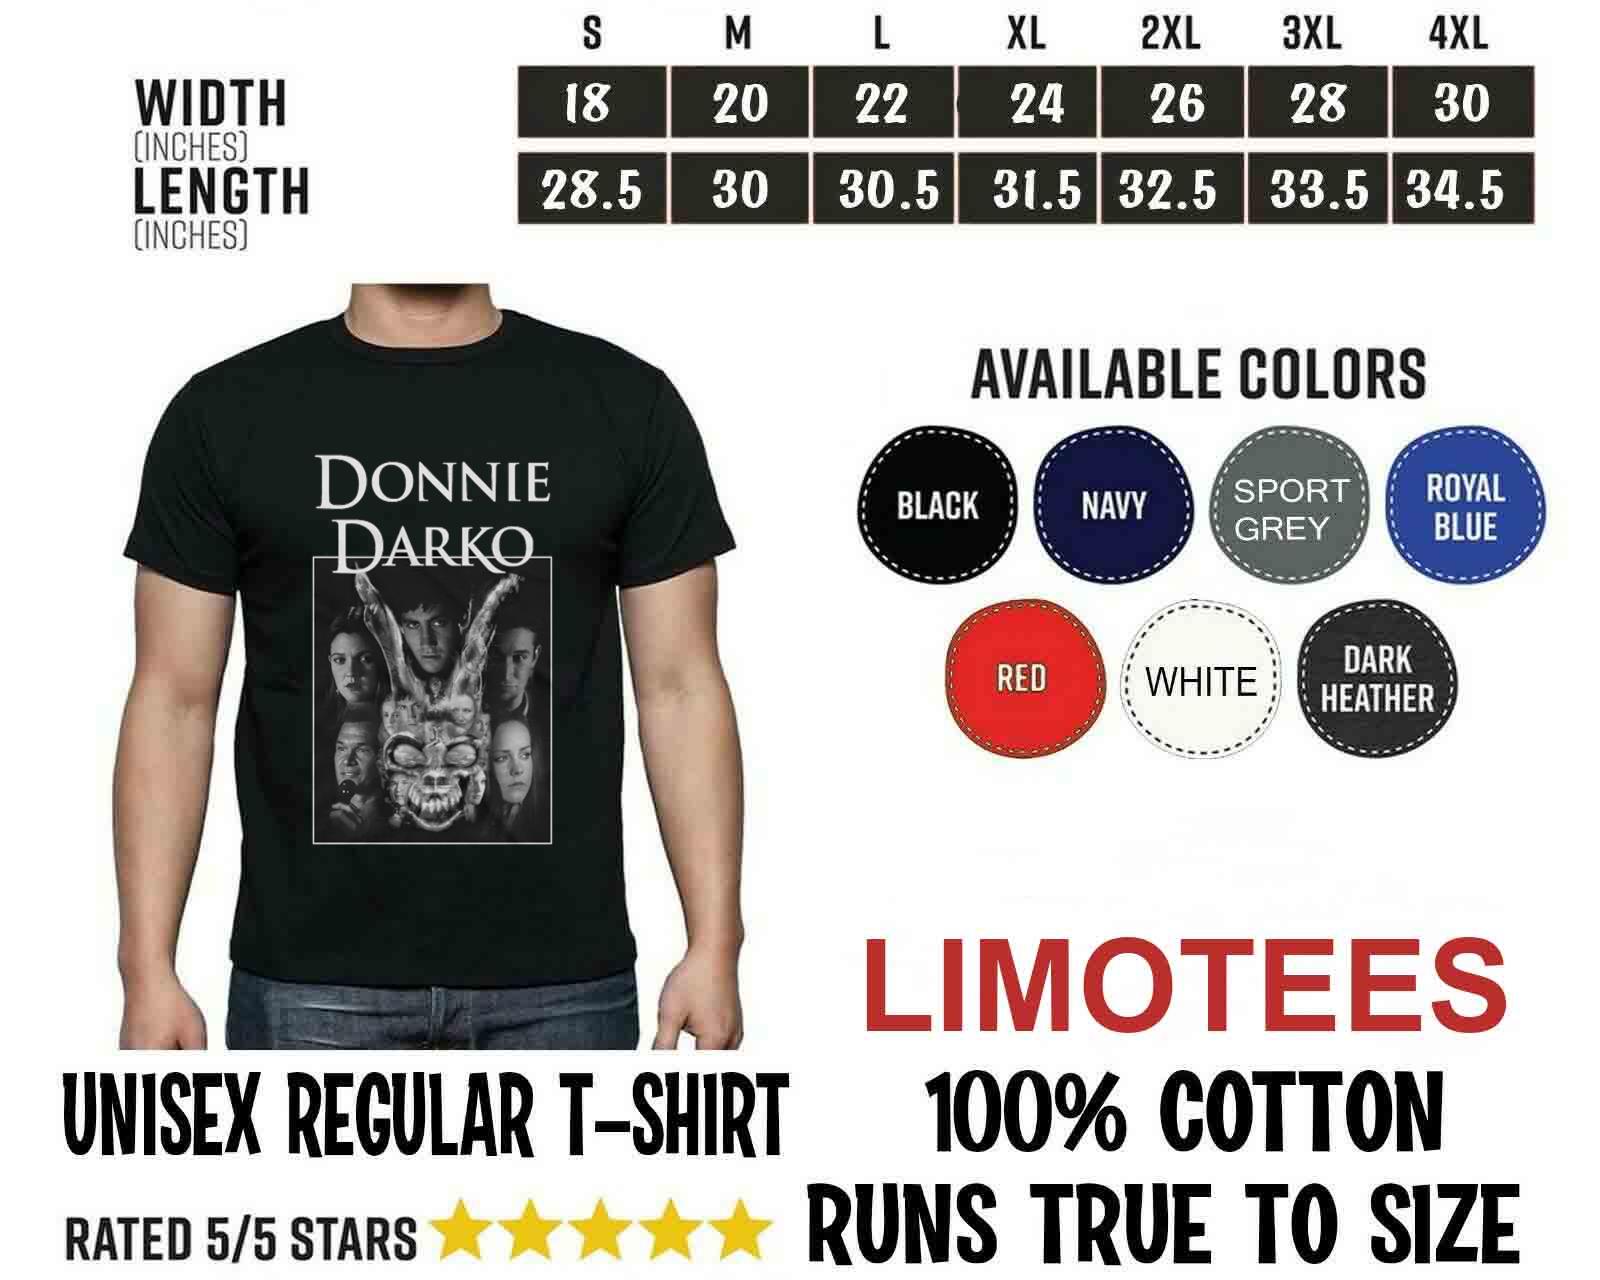 Donnie Darko movie poster graphic t-shirt - Limotees